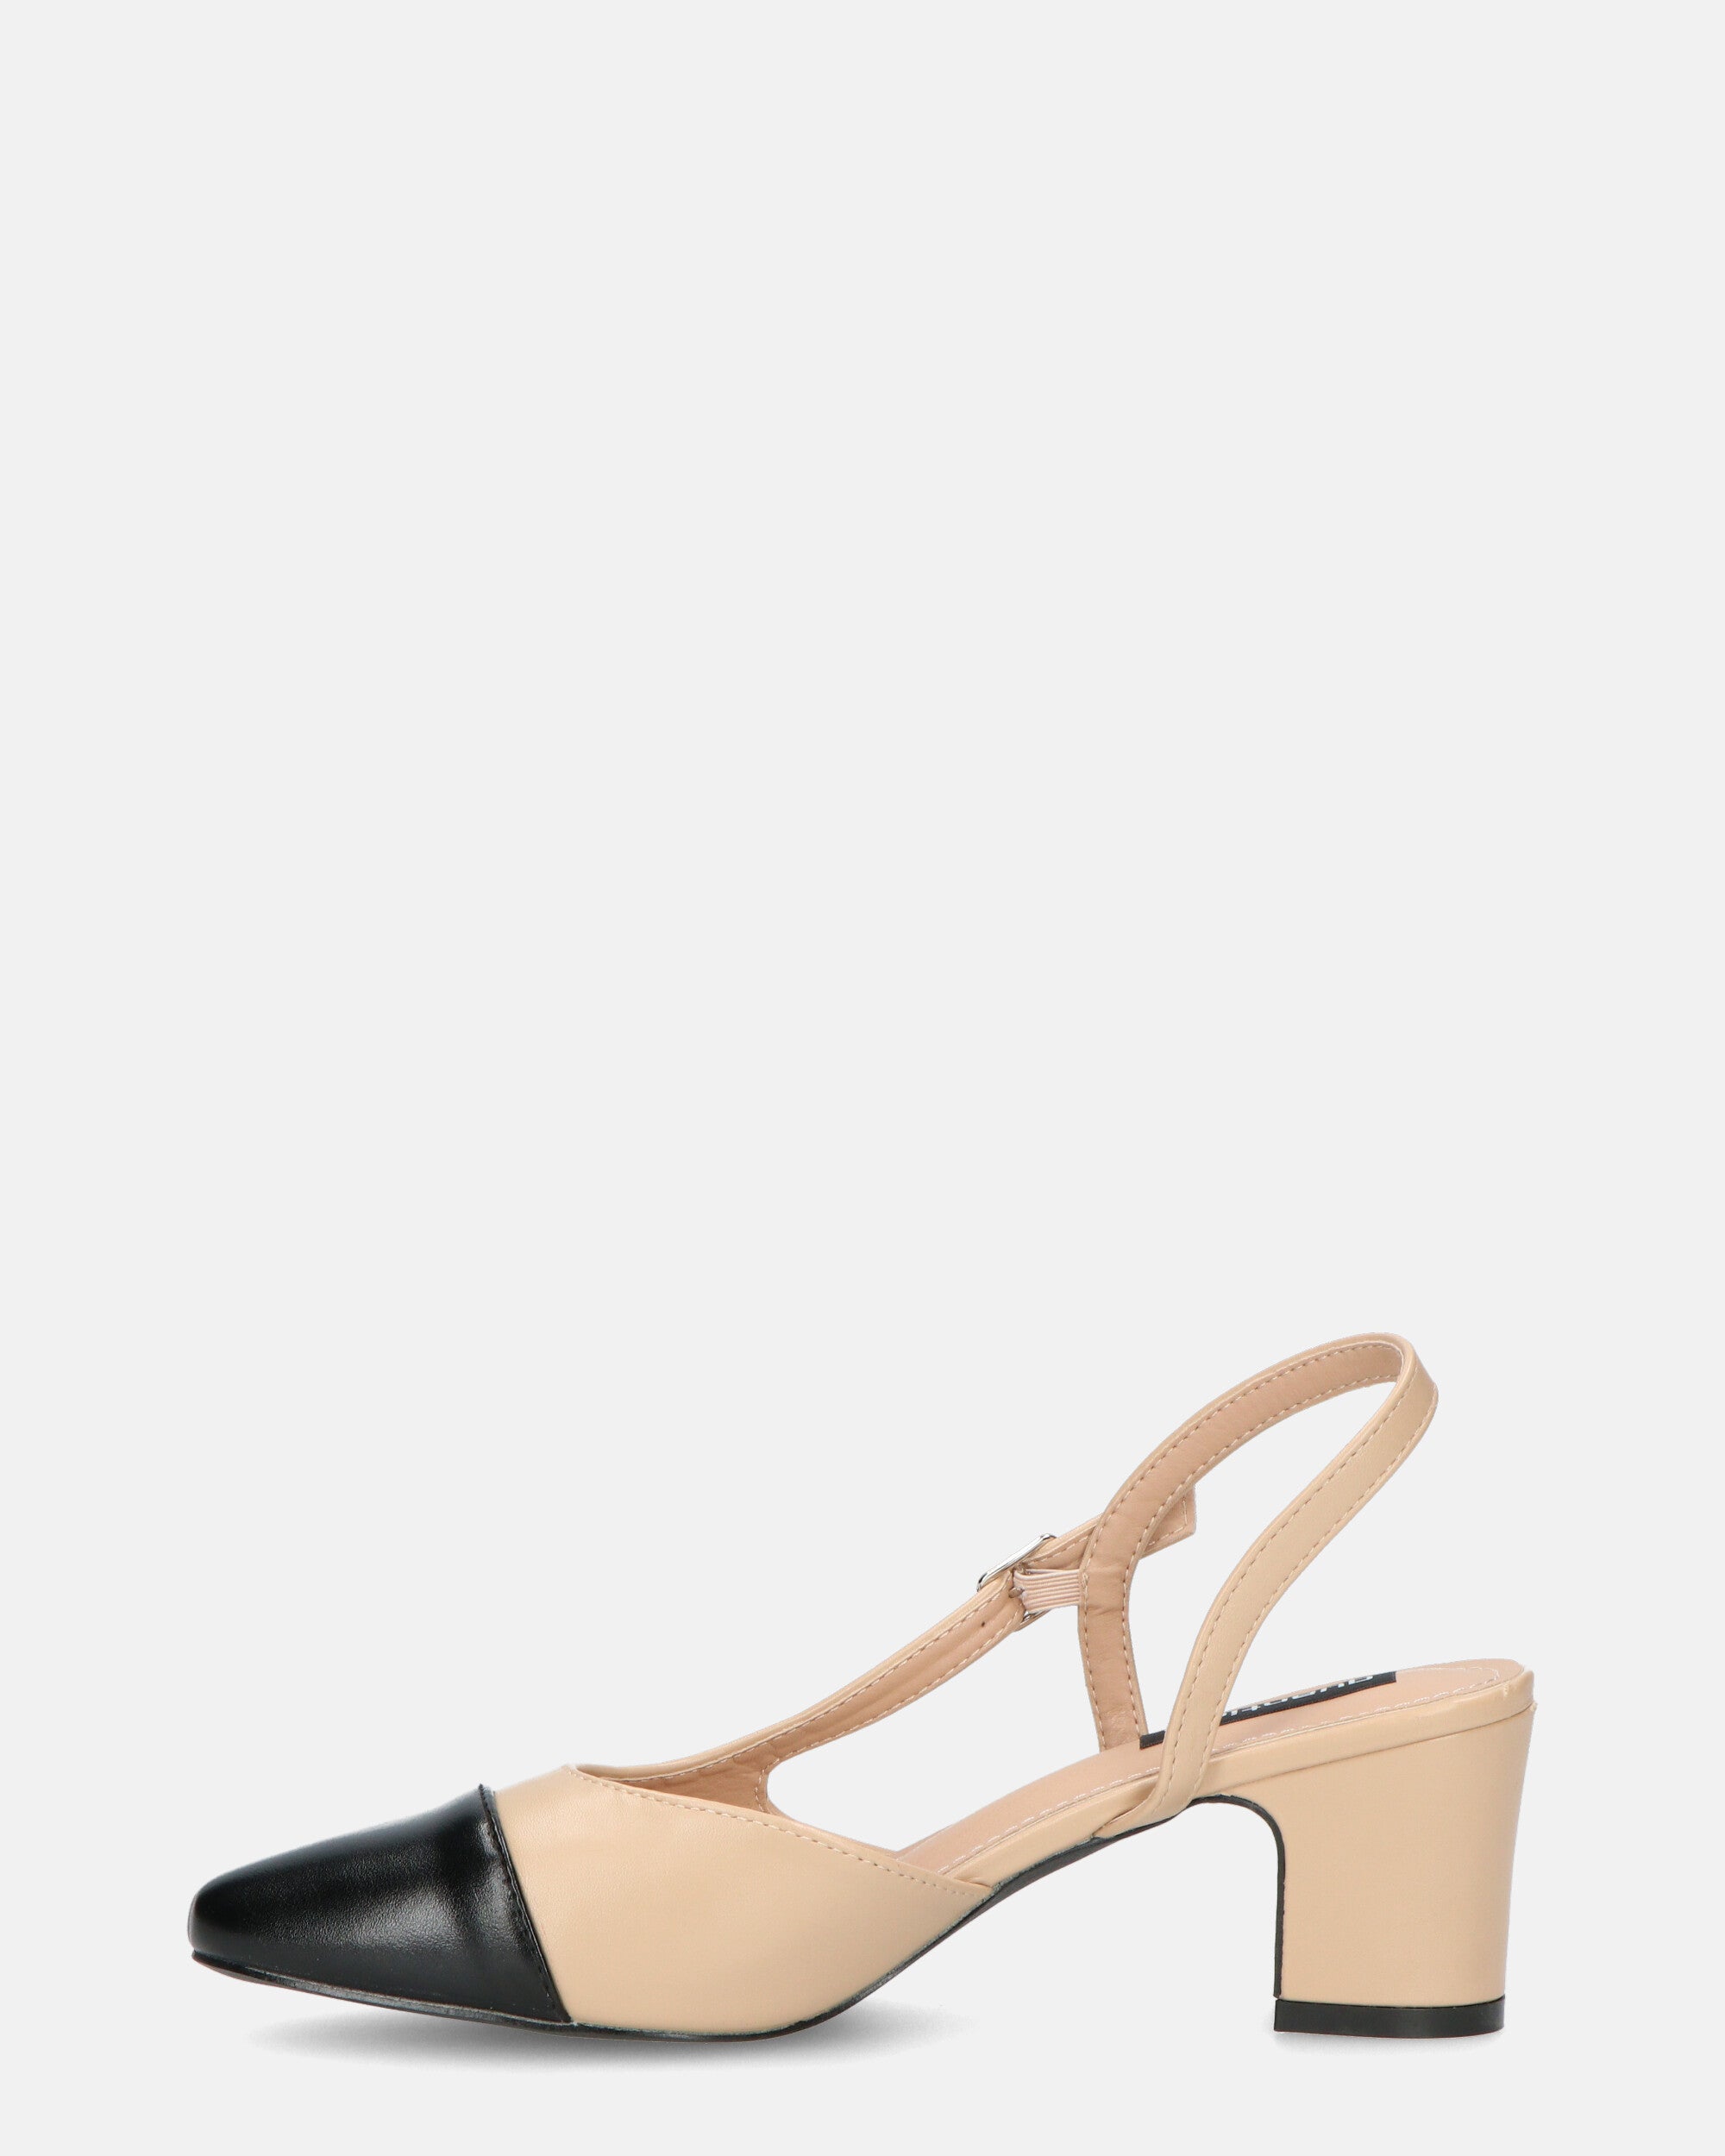 AURI - beige pump with low heel and black tip